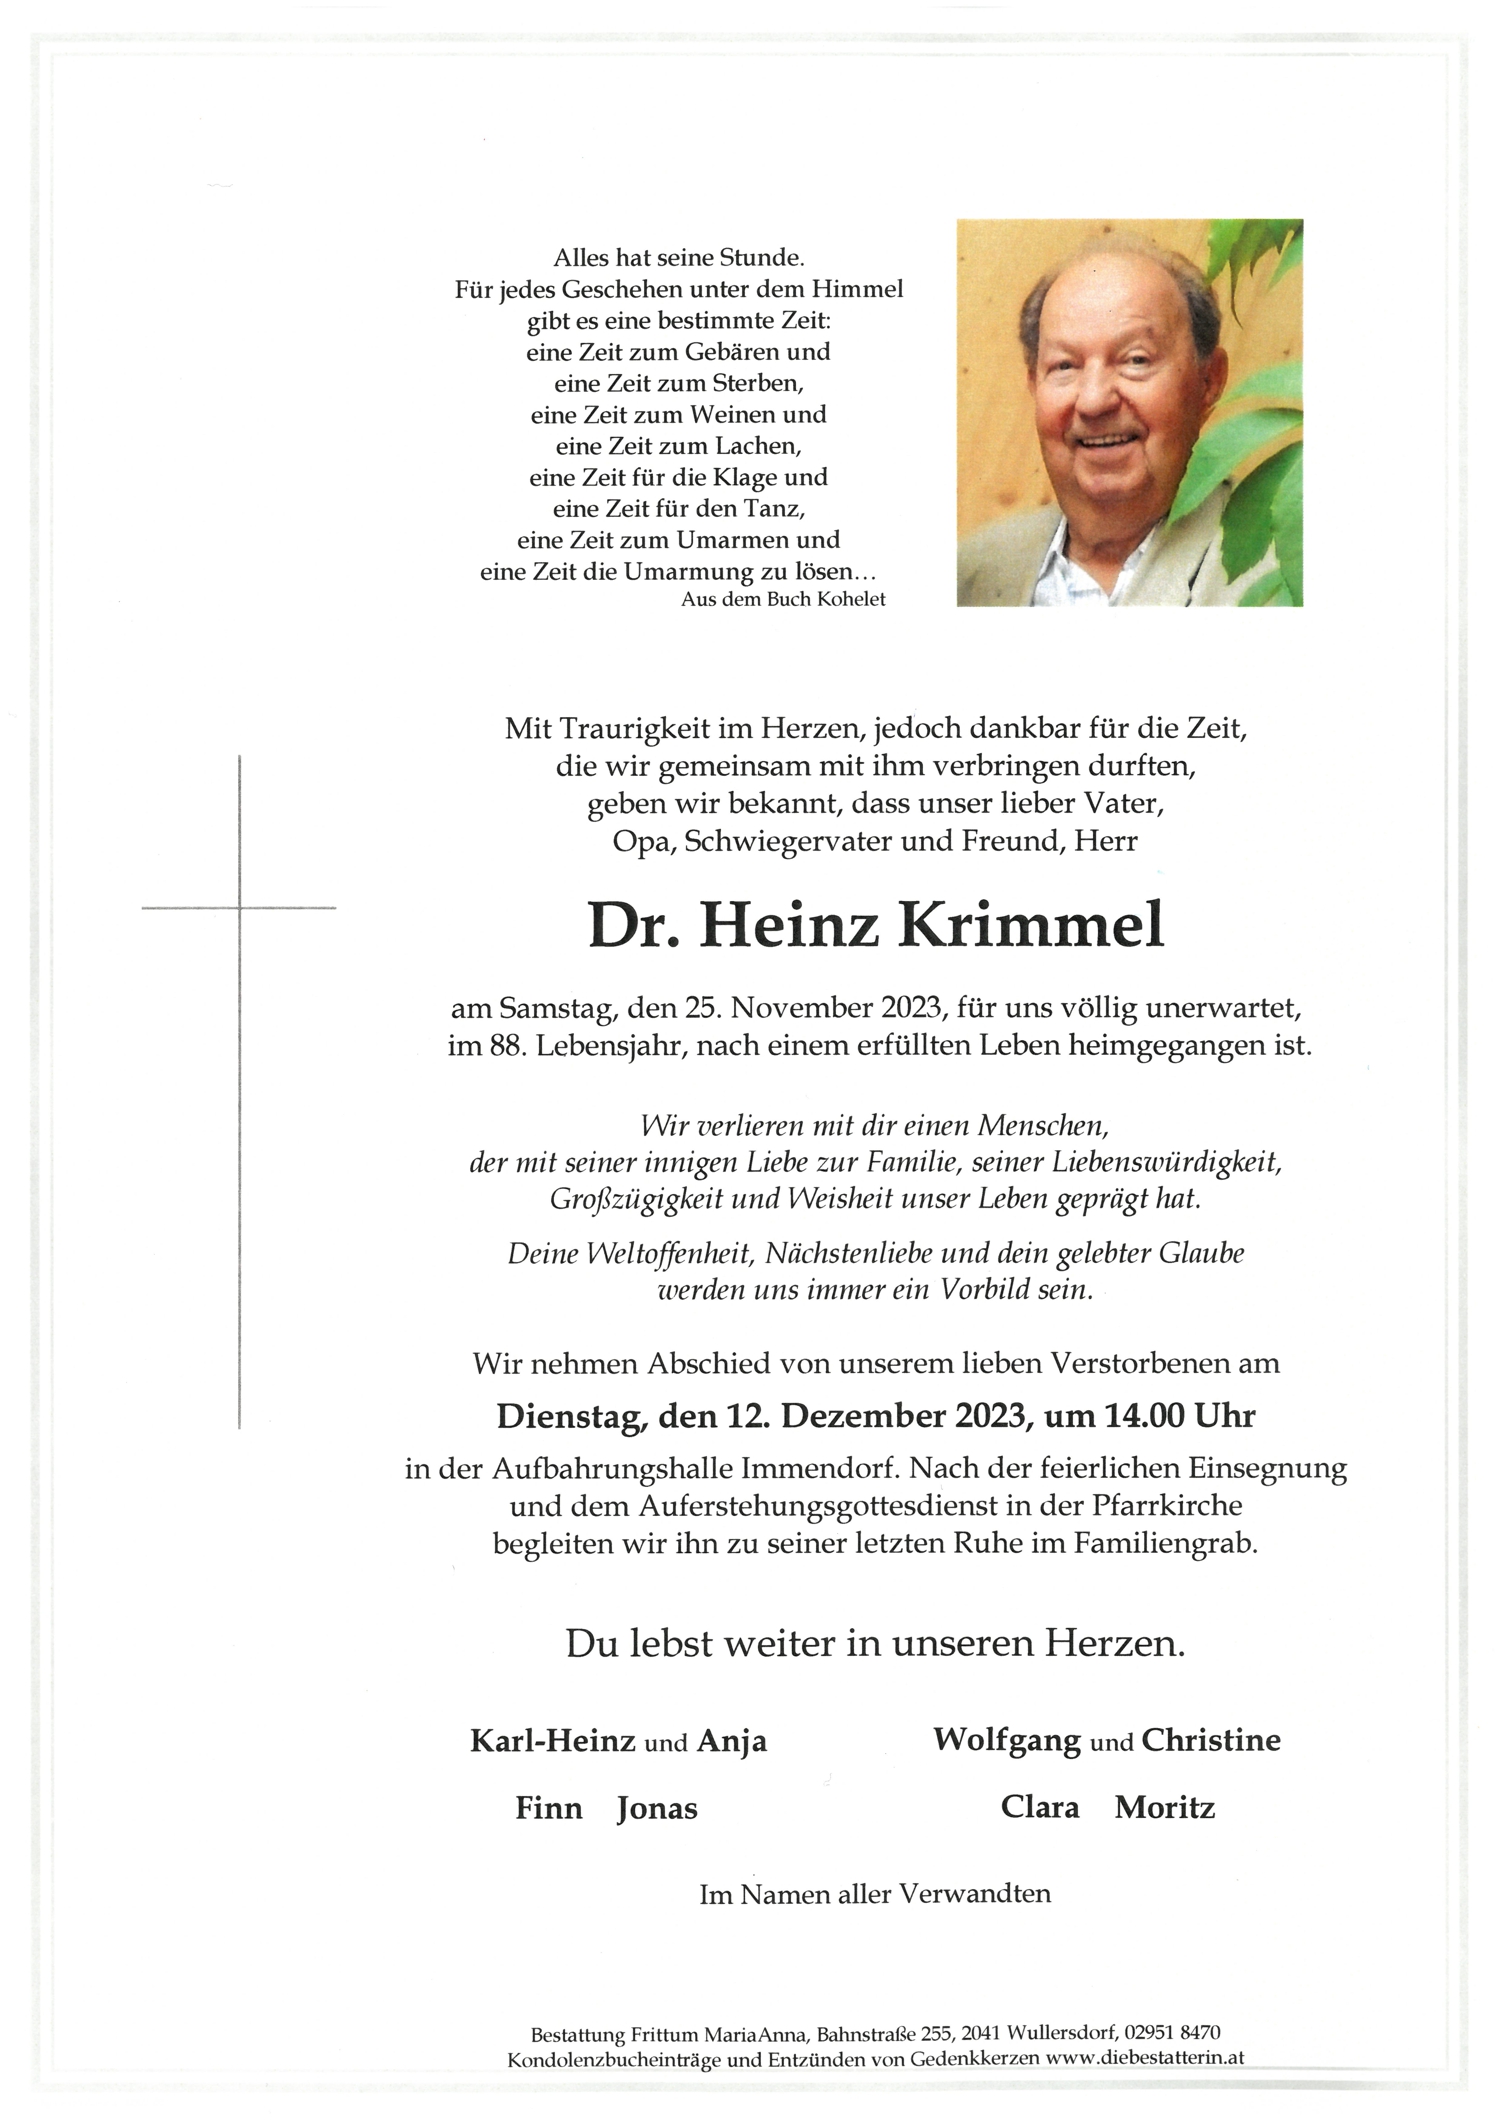 Dr. Heinz Krimmel